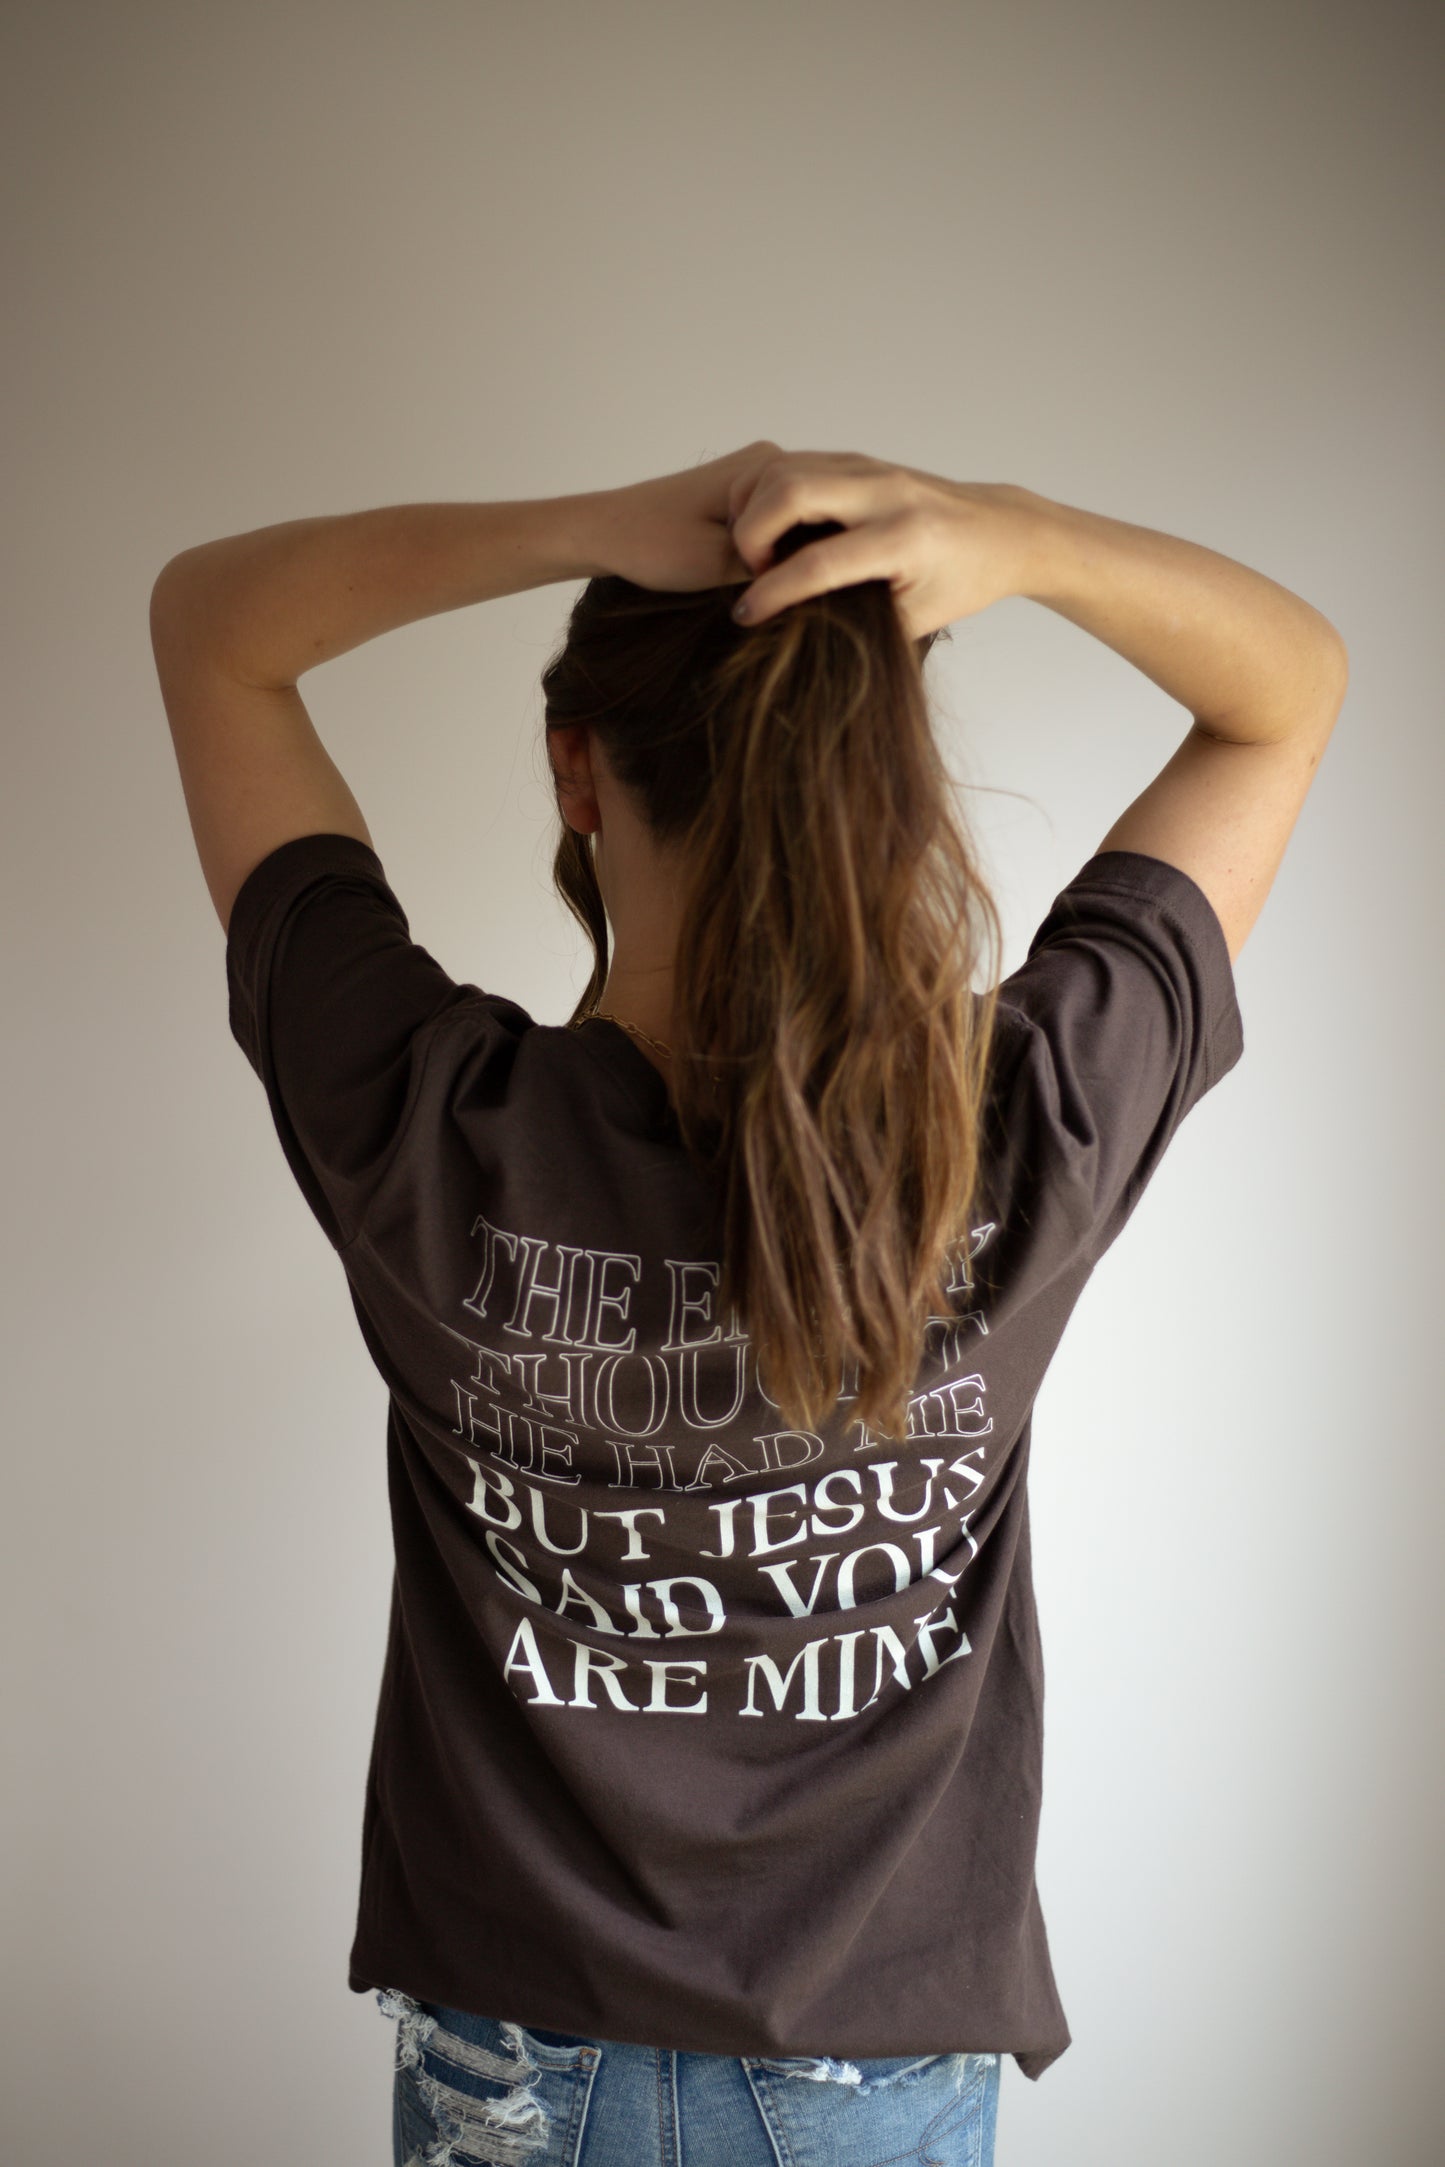 Minimal Christian Shirt | Christian Apparel | Baptism Shirt | Jesus Shirt | Christian Tshirt | Christian Shirts | Baptism Gift